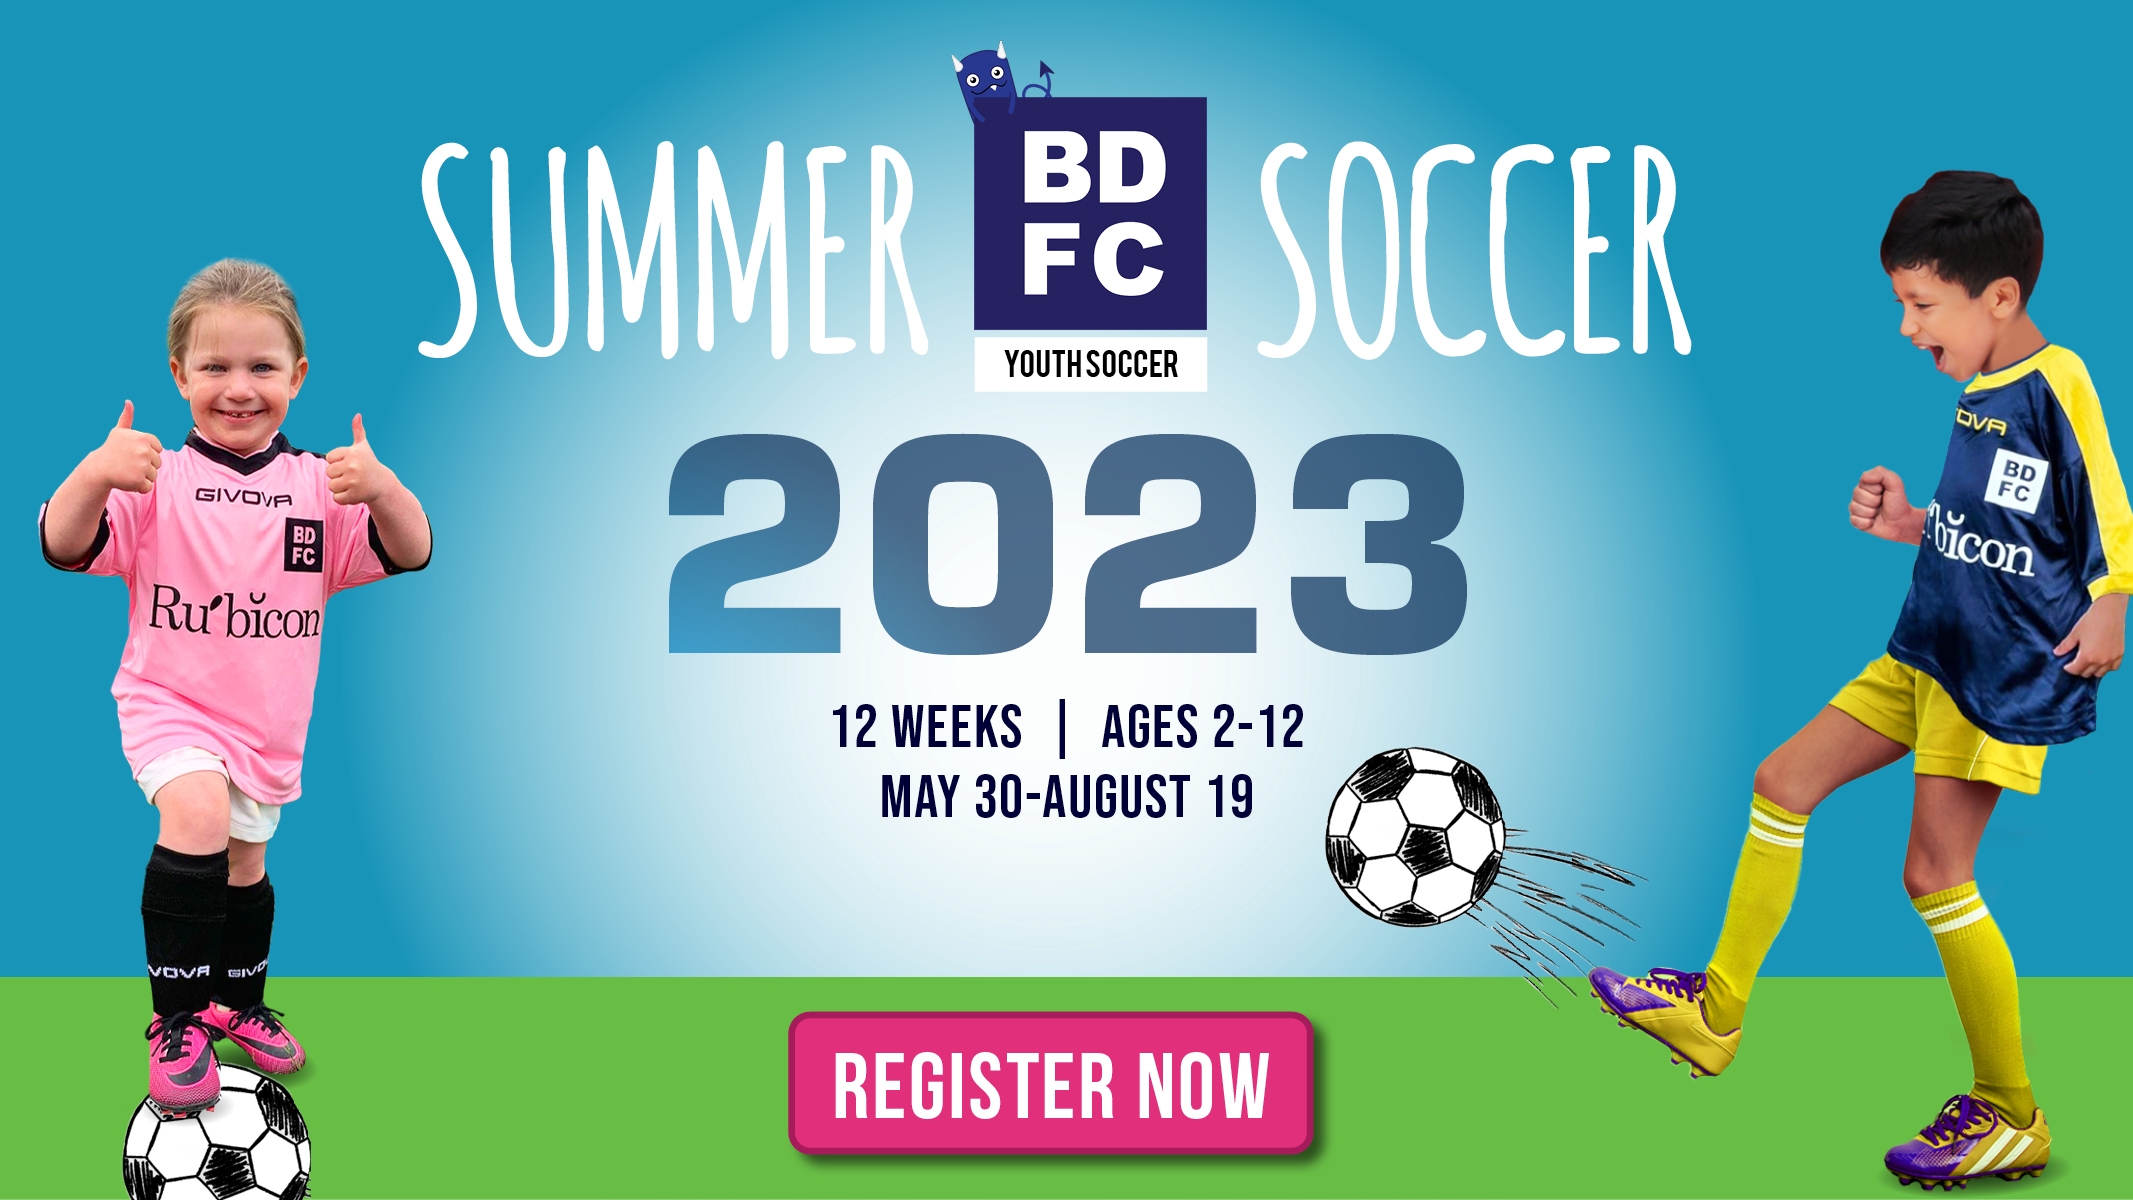 Blue Devils Summer Soccer 2023